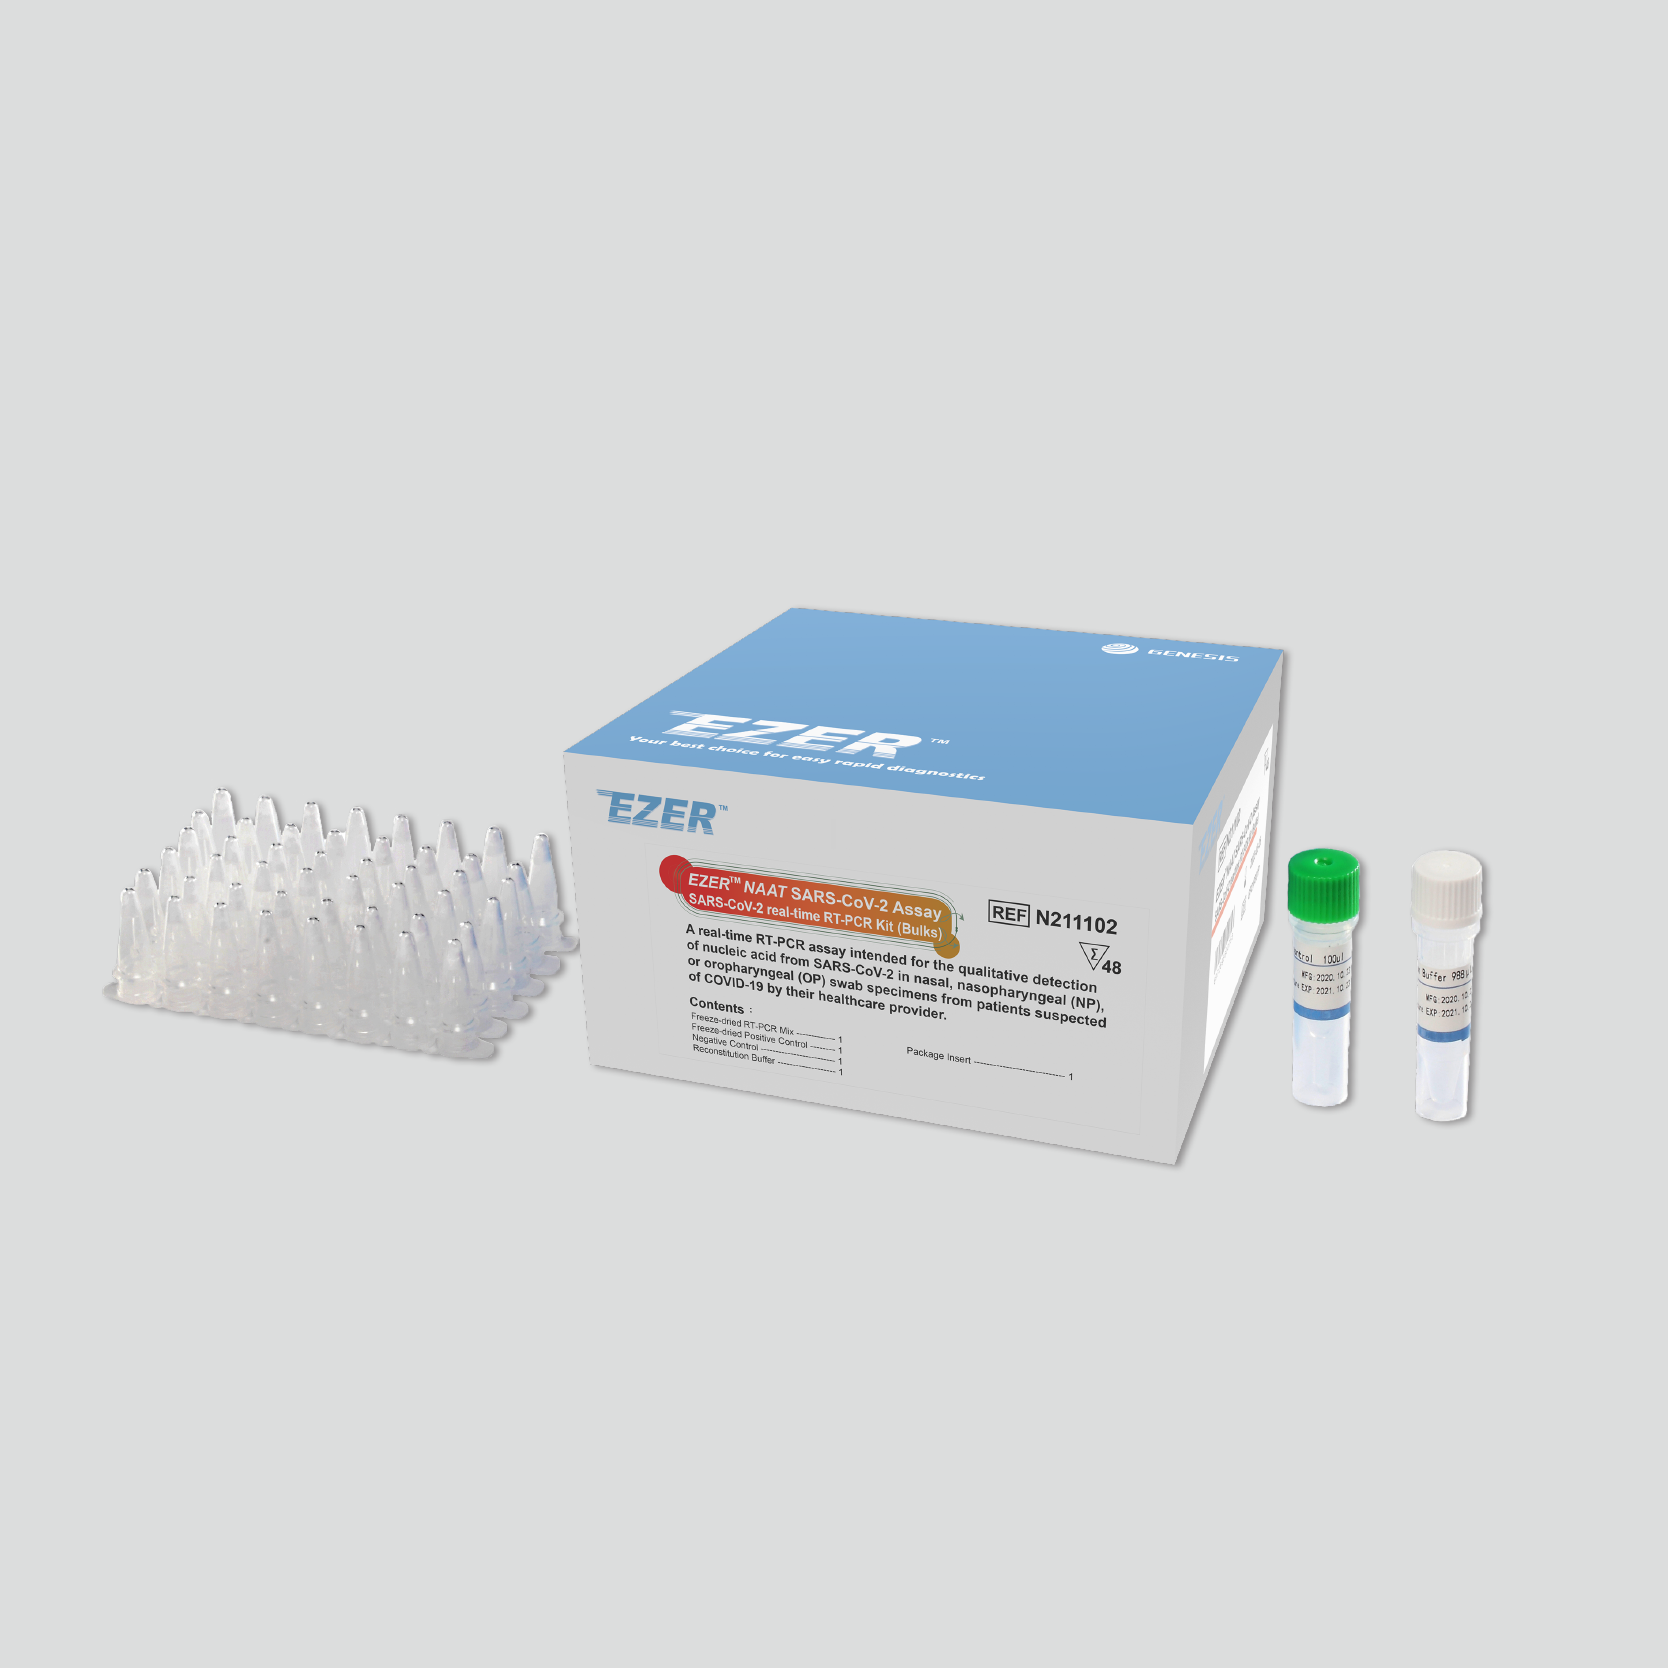 EZER NAAT SARS-CoV-2 real-time RT-PCR Kit